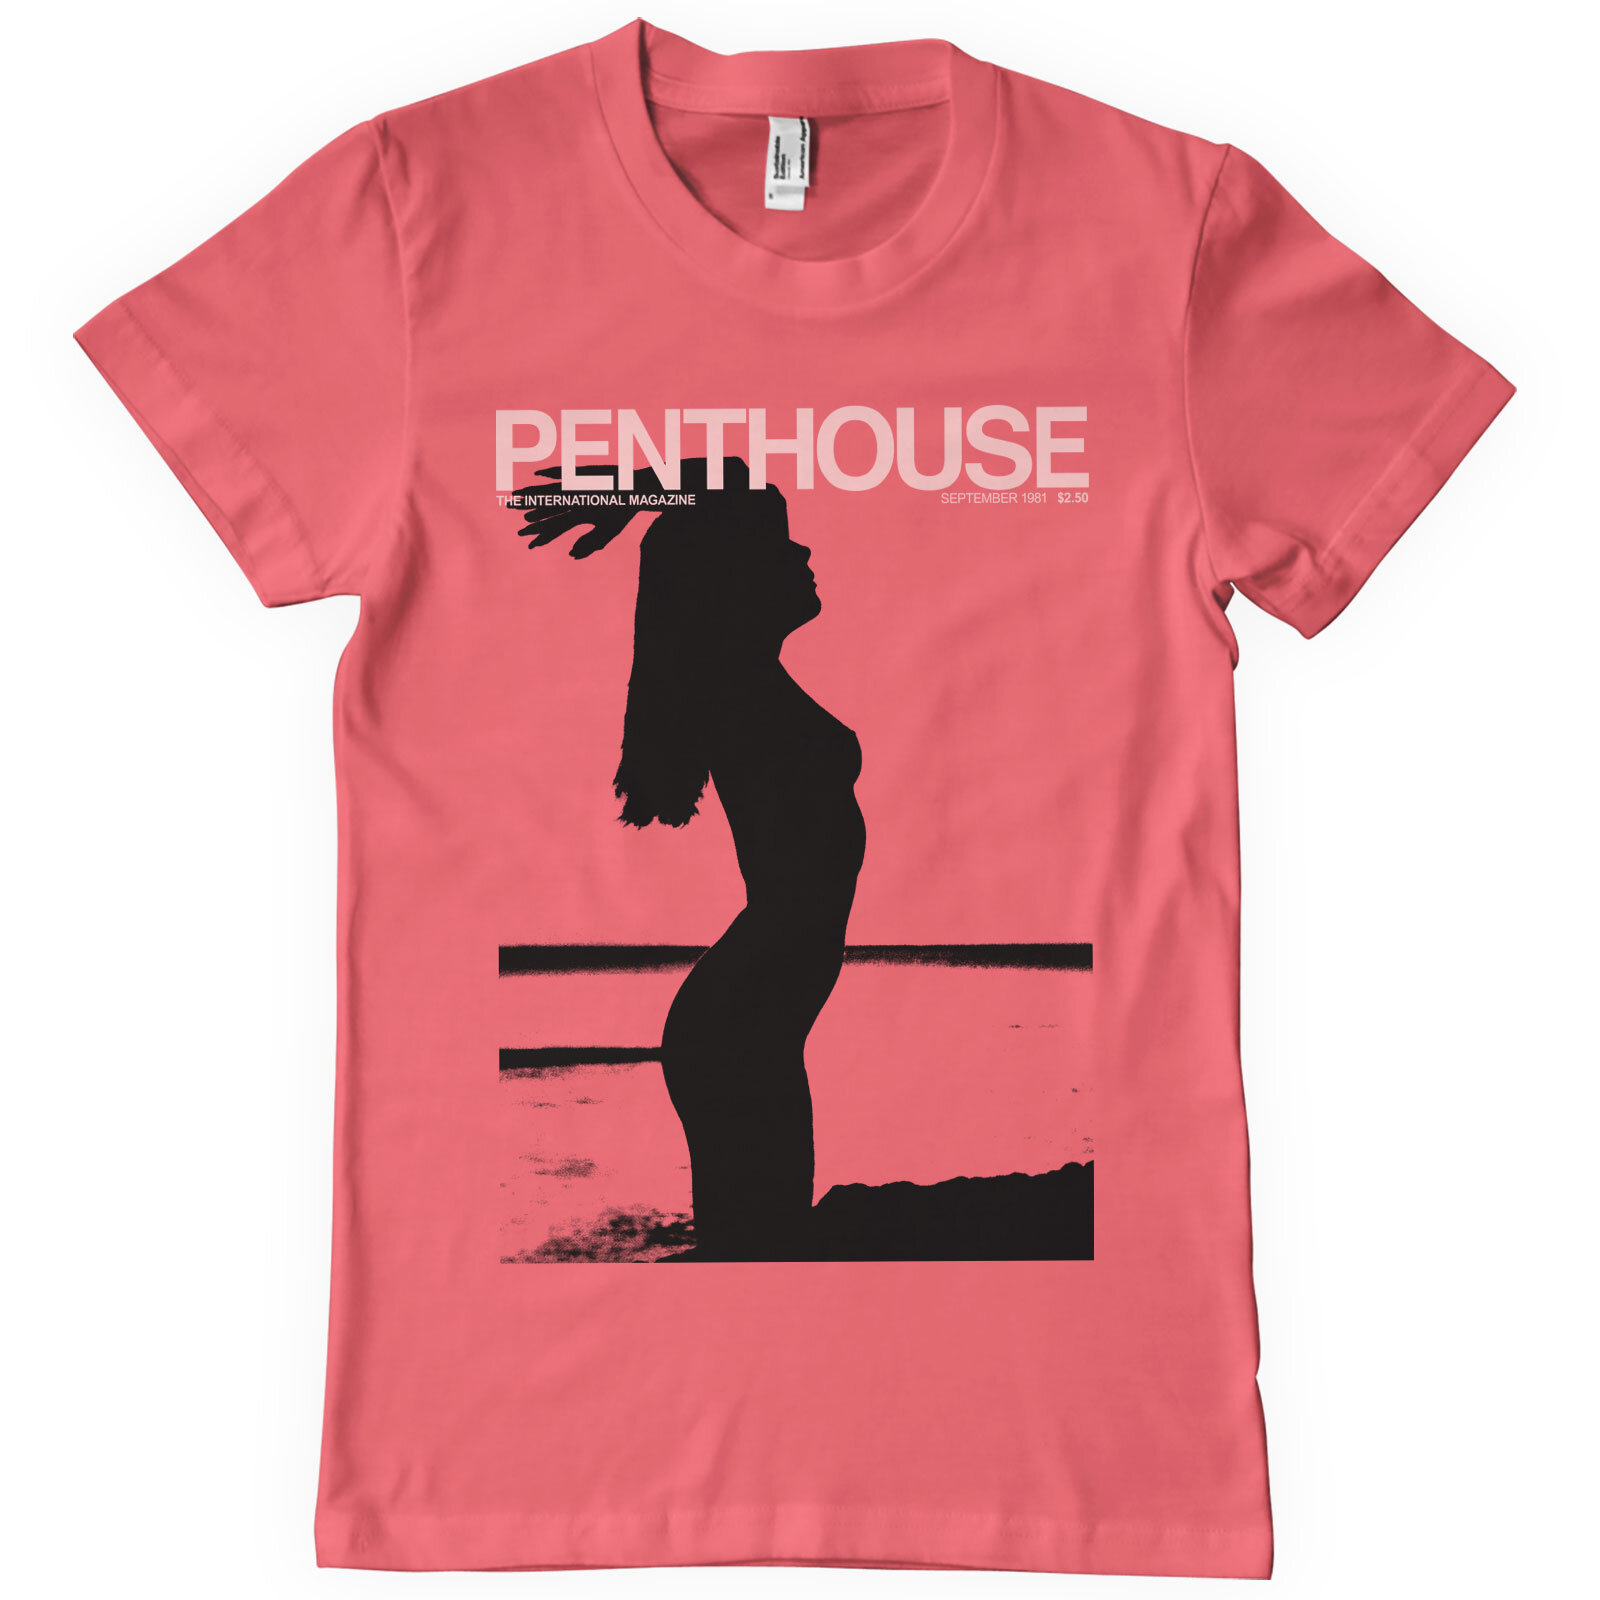 Penthouse September 1981 Cover T-Shirt